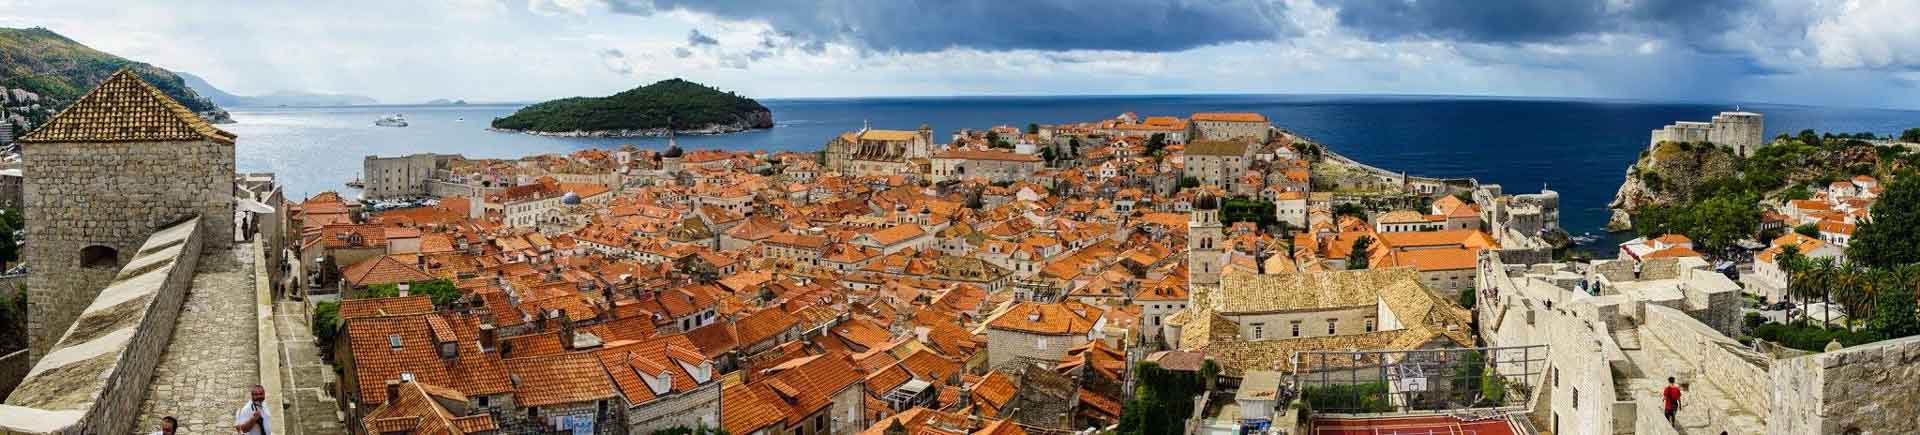 Croatia Dubrovnik City Walls tour, dubrovnik, croatia, pescart, photo blog, travel blog, blog, photo travel blog, enrico pescantini, pescantini